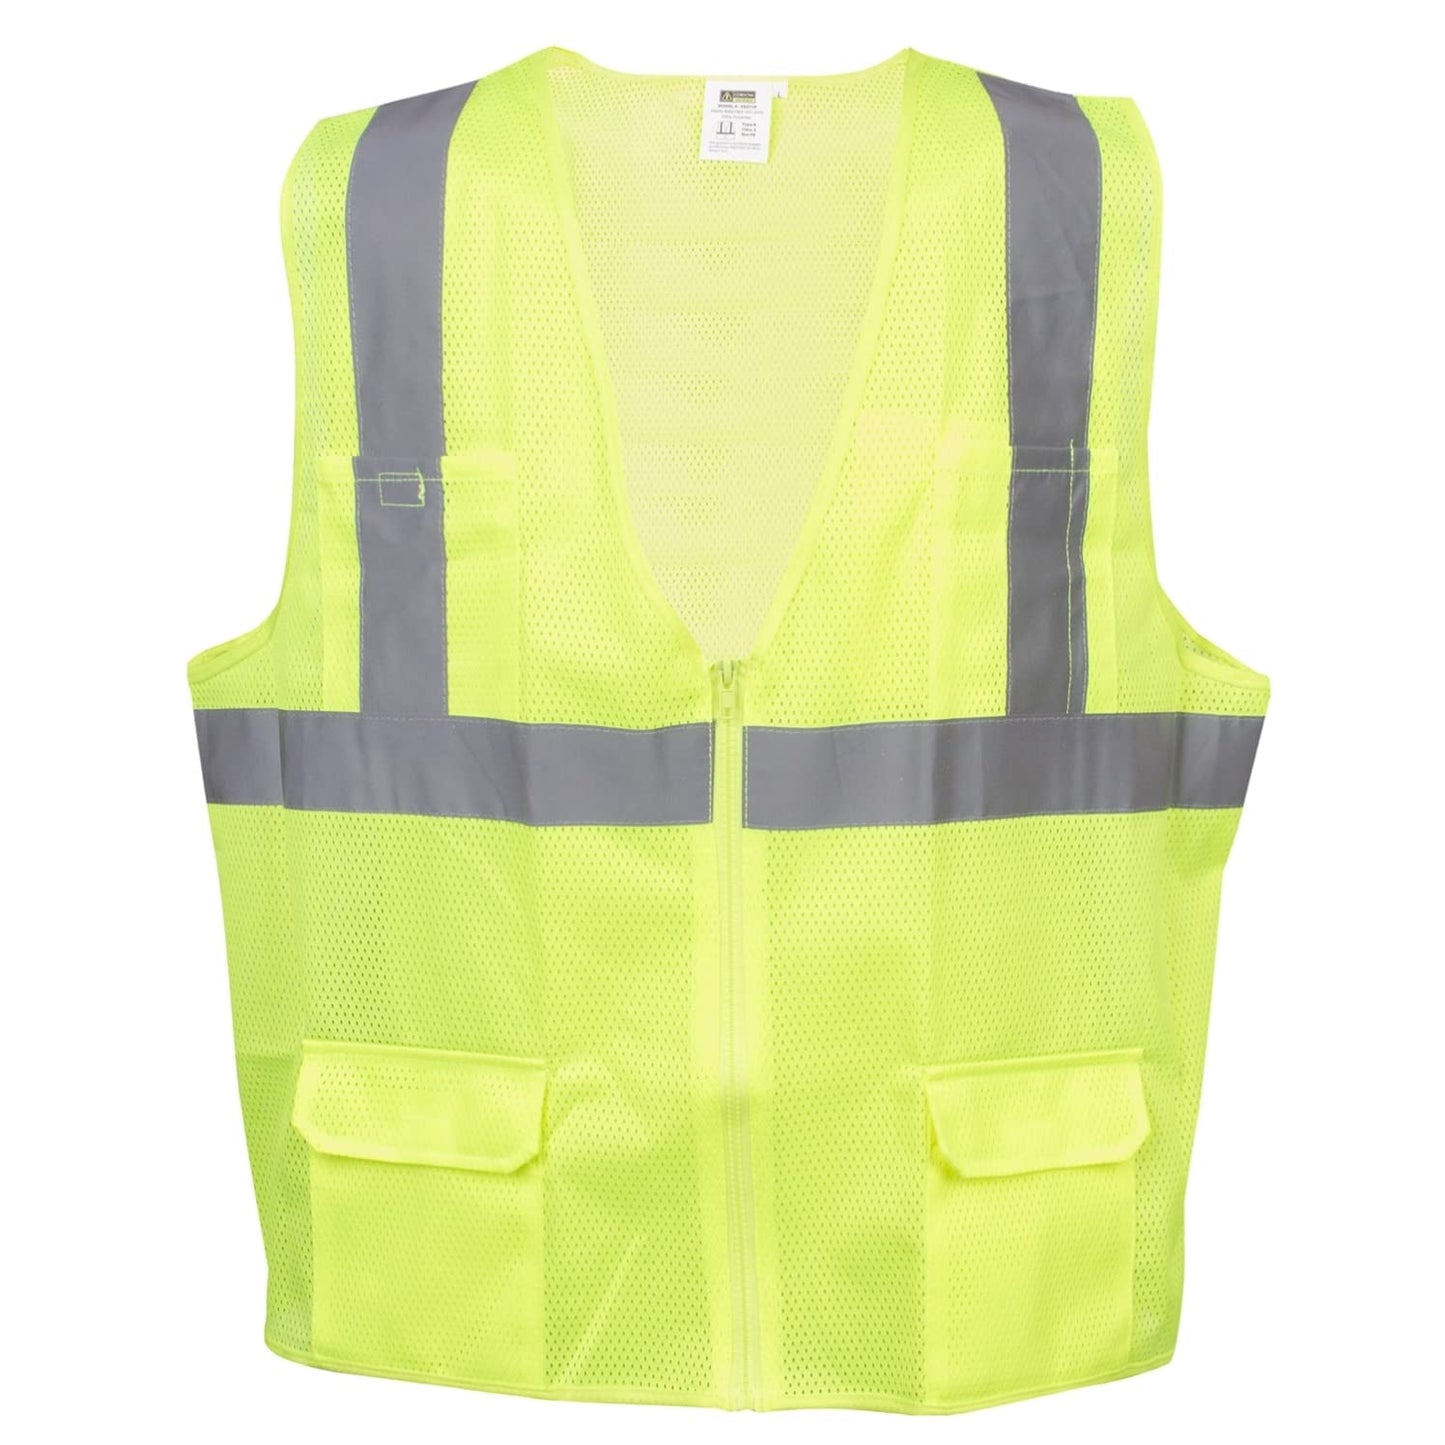 Type R, Class 2, Surveyor's Safety Vest, High-Visibility